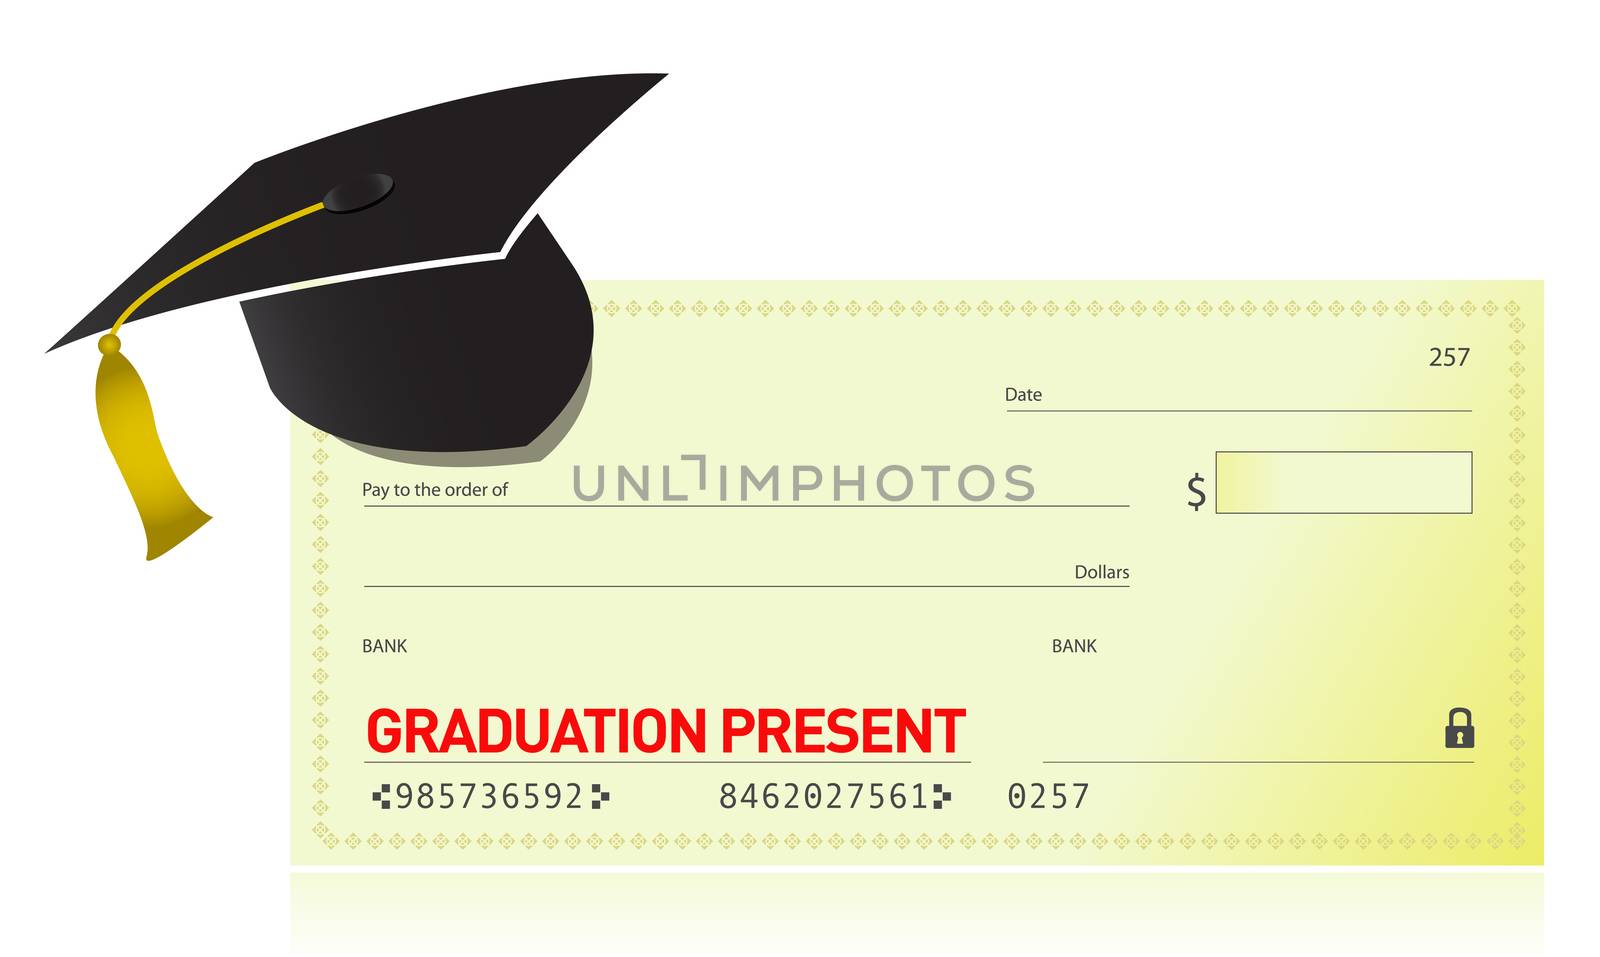 graduation present and graduation hat illustration design by alexmillos